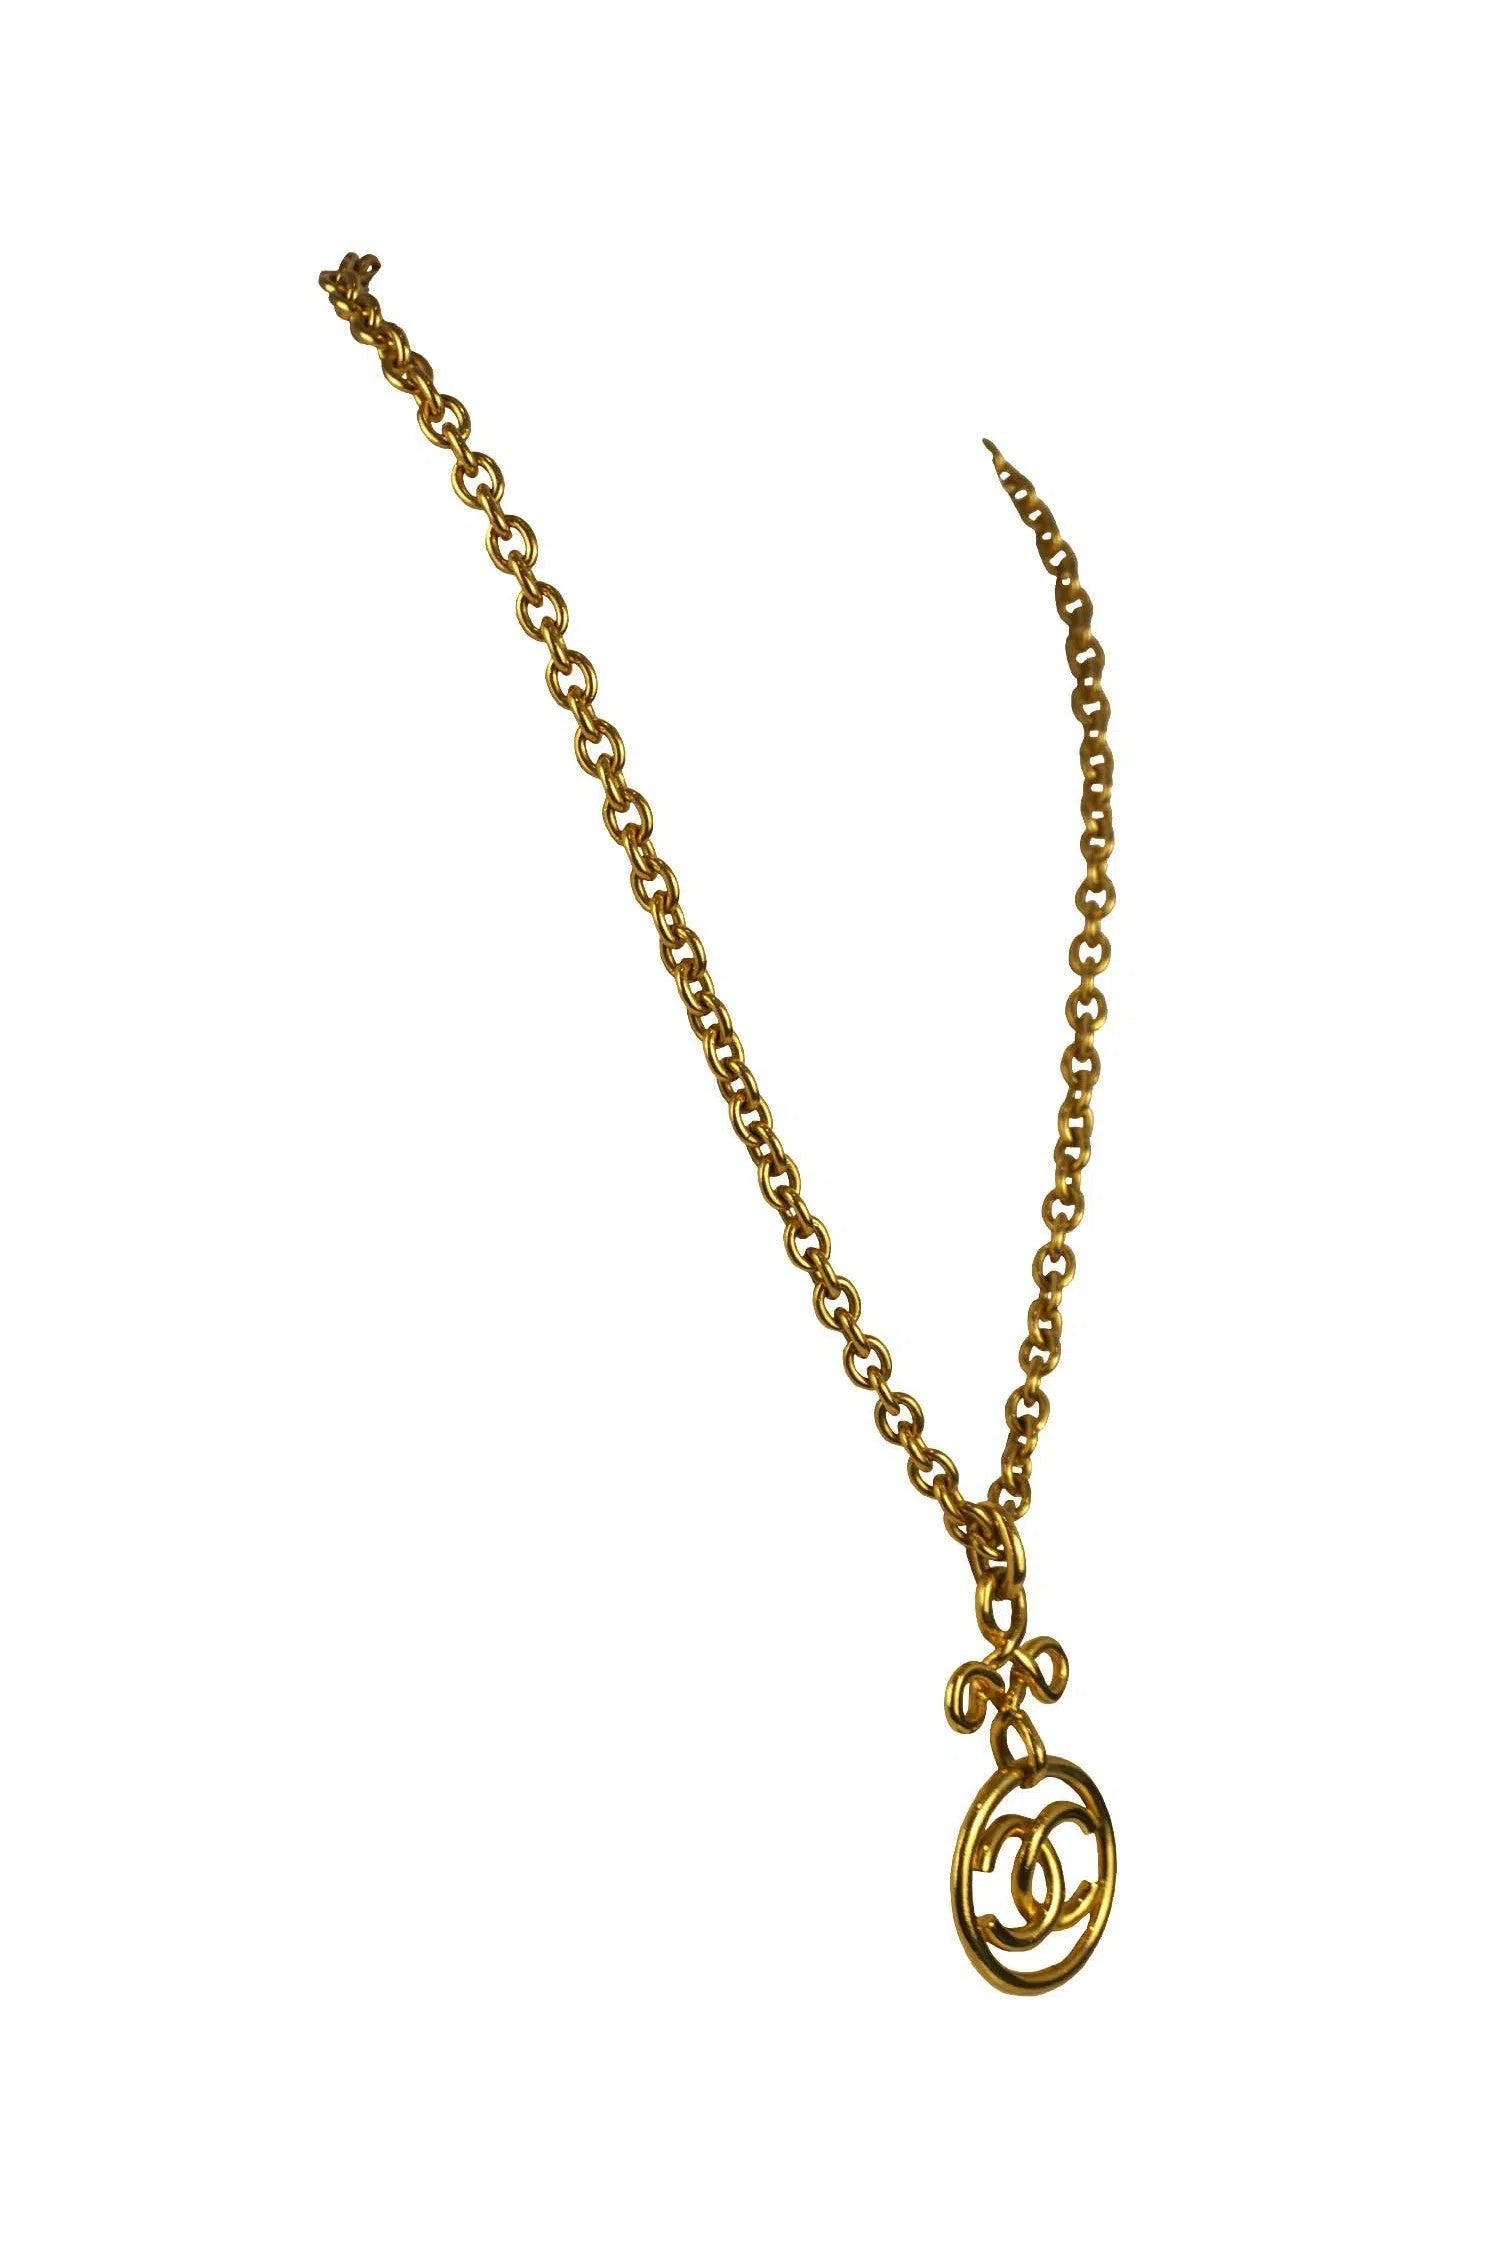 Chanel Vintage Twisted Cross CC Pendant Necklace 1993